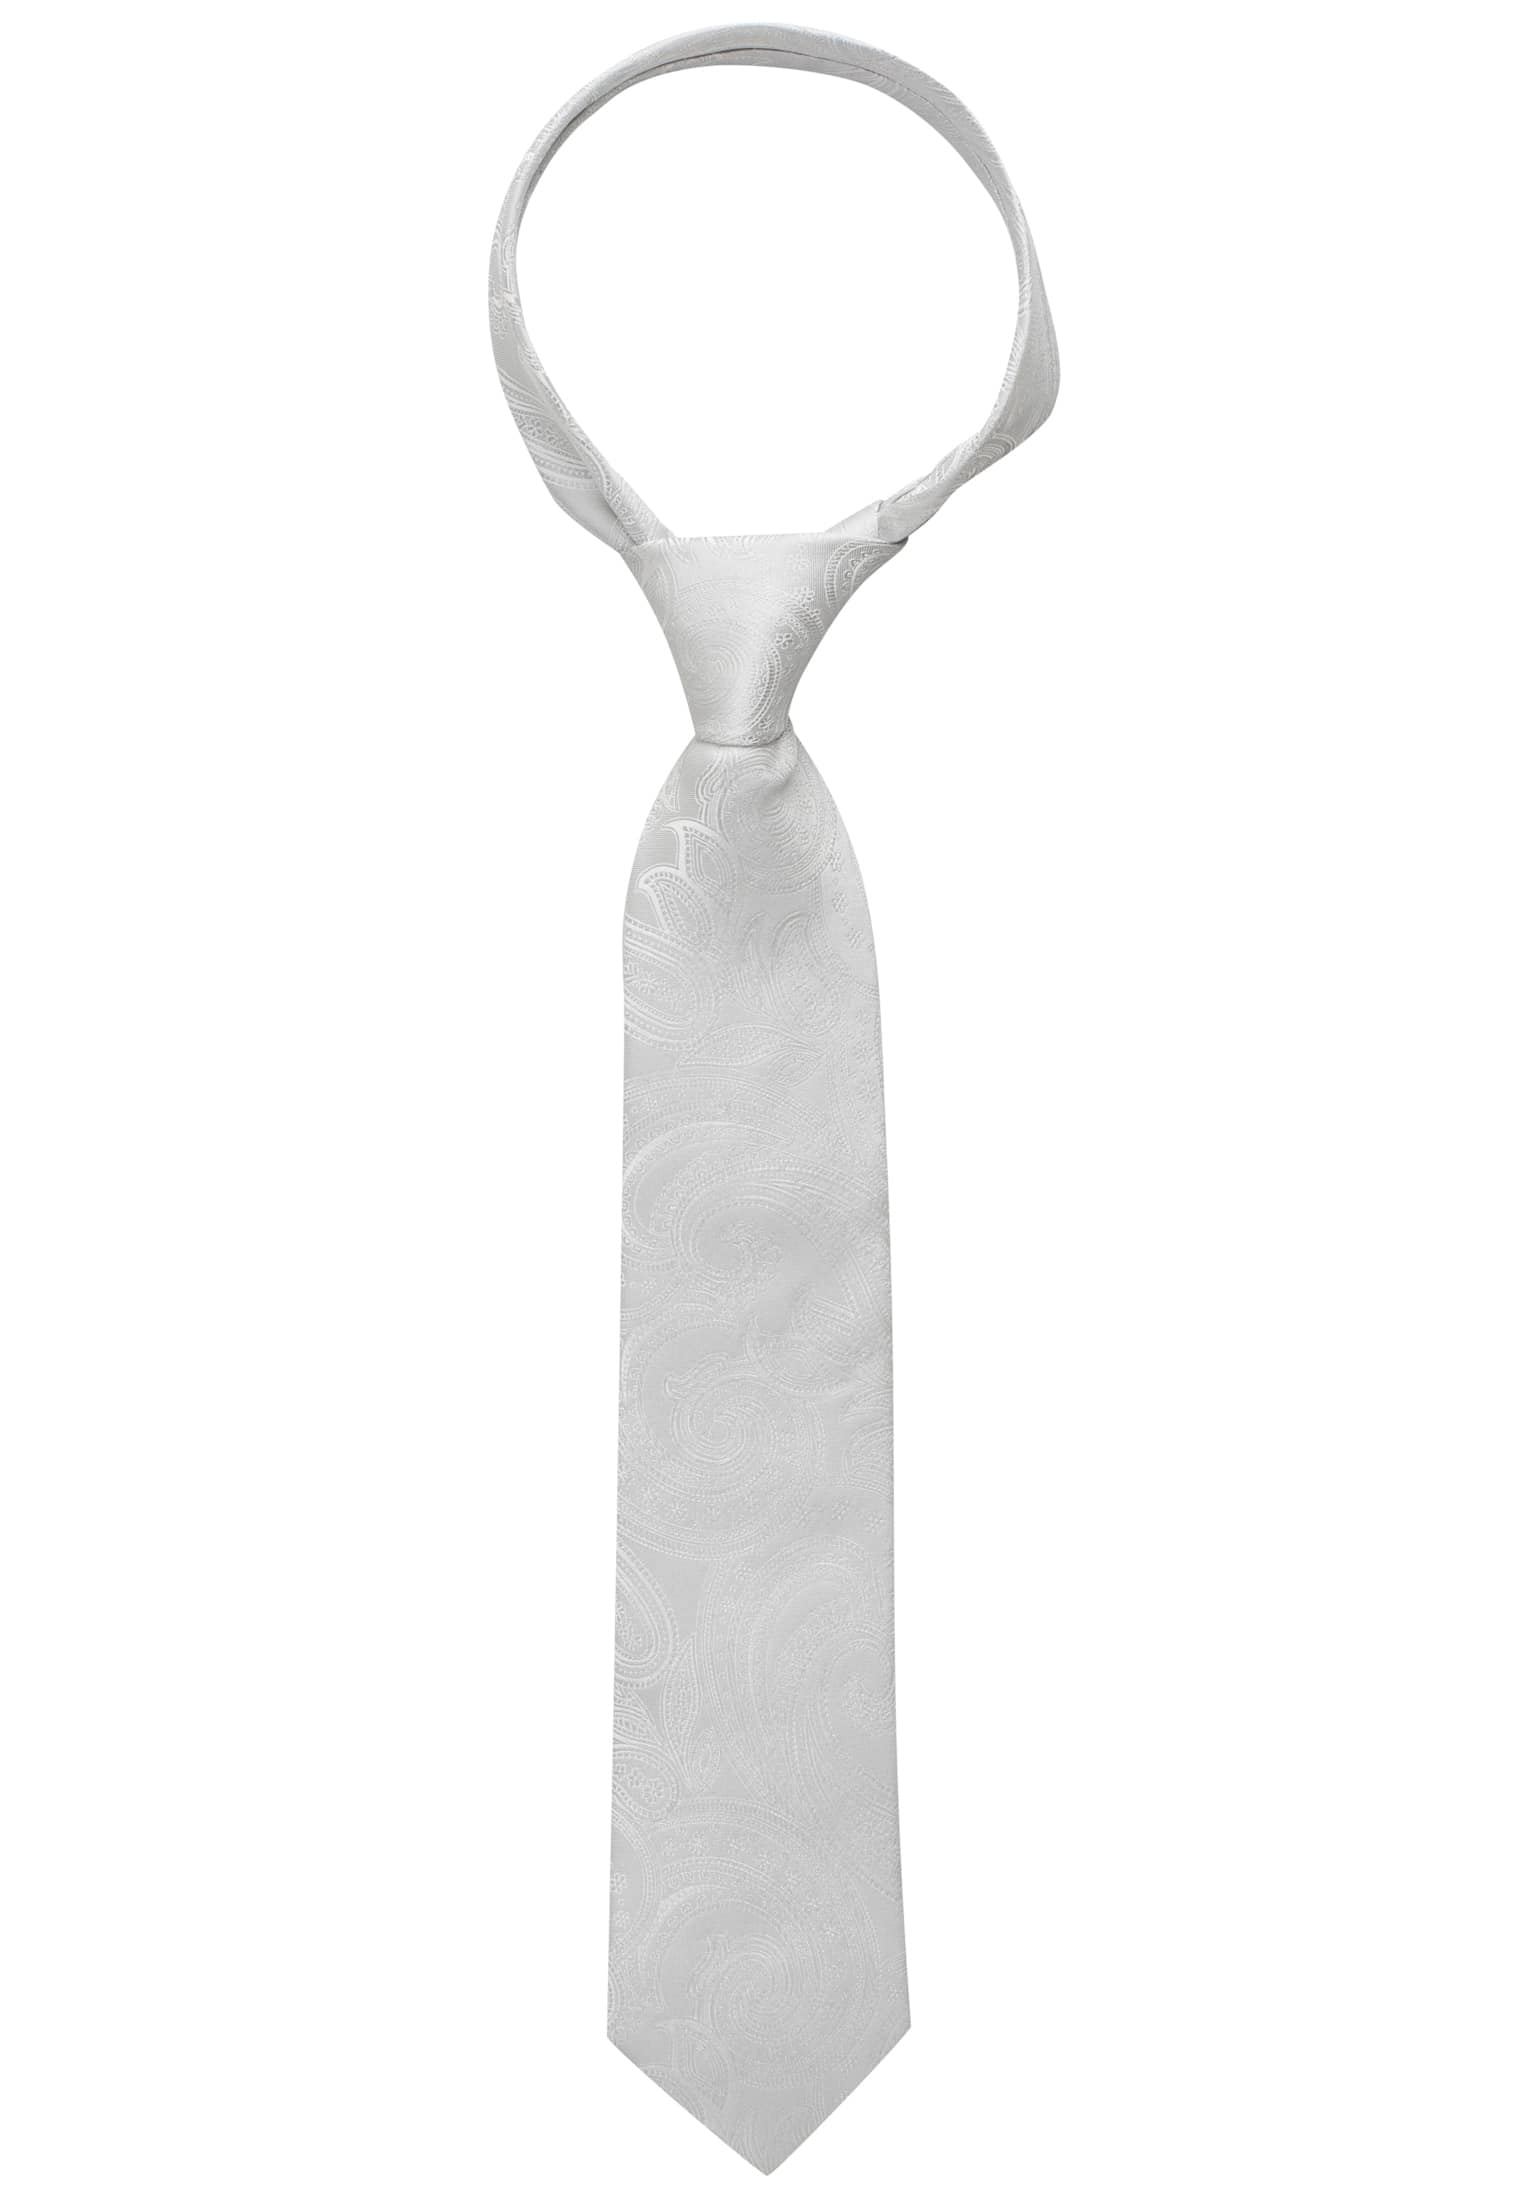 Krawatte in silber | silber 160 | | 1AC01867-03-11-160 gemustert